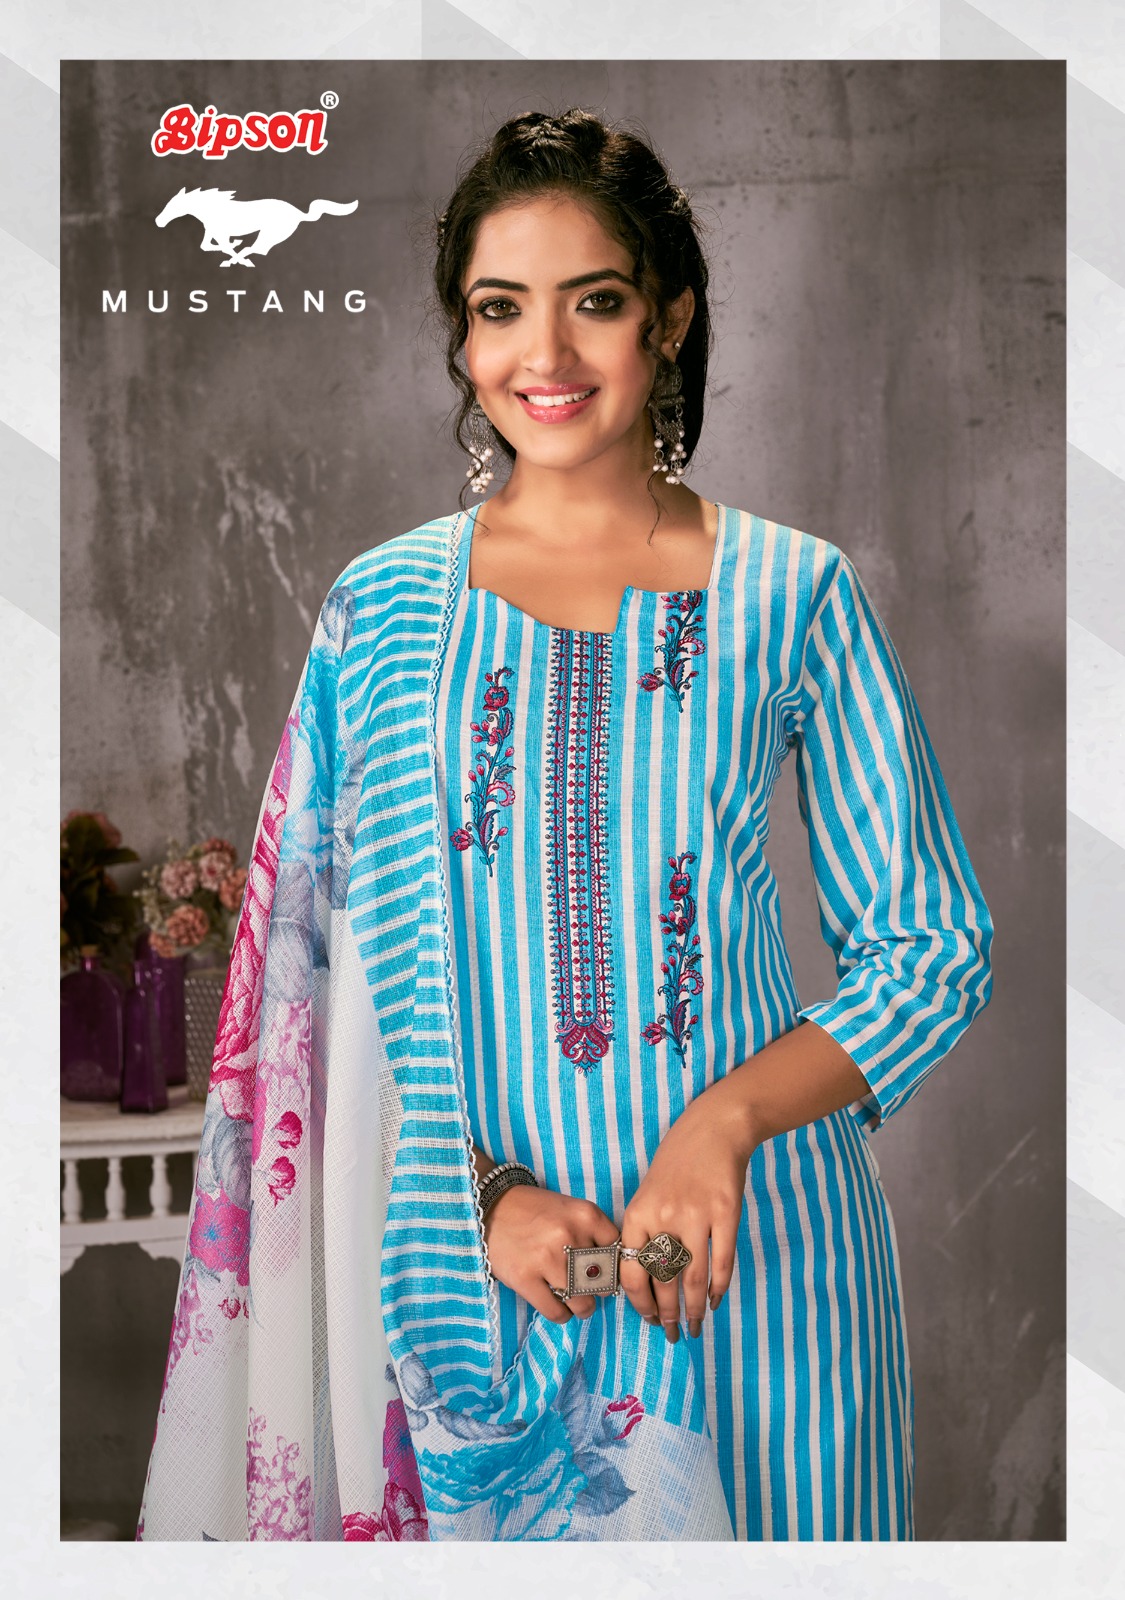 bipson mustang 2203 cotton  gorgeous look salwar suit catalog